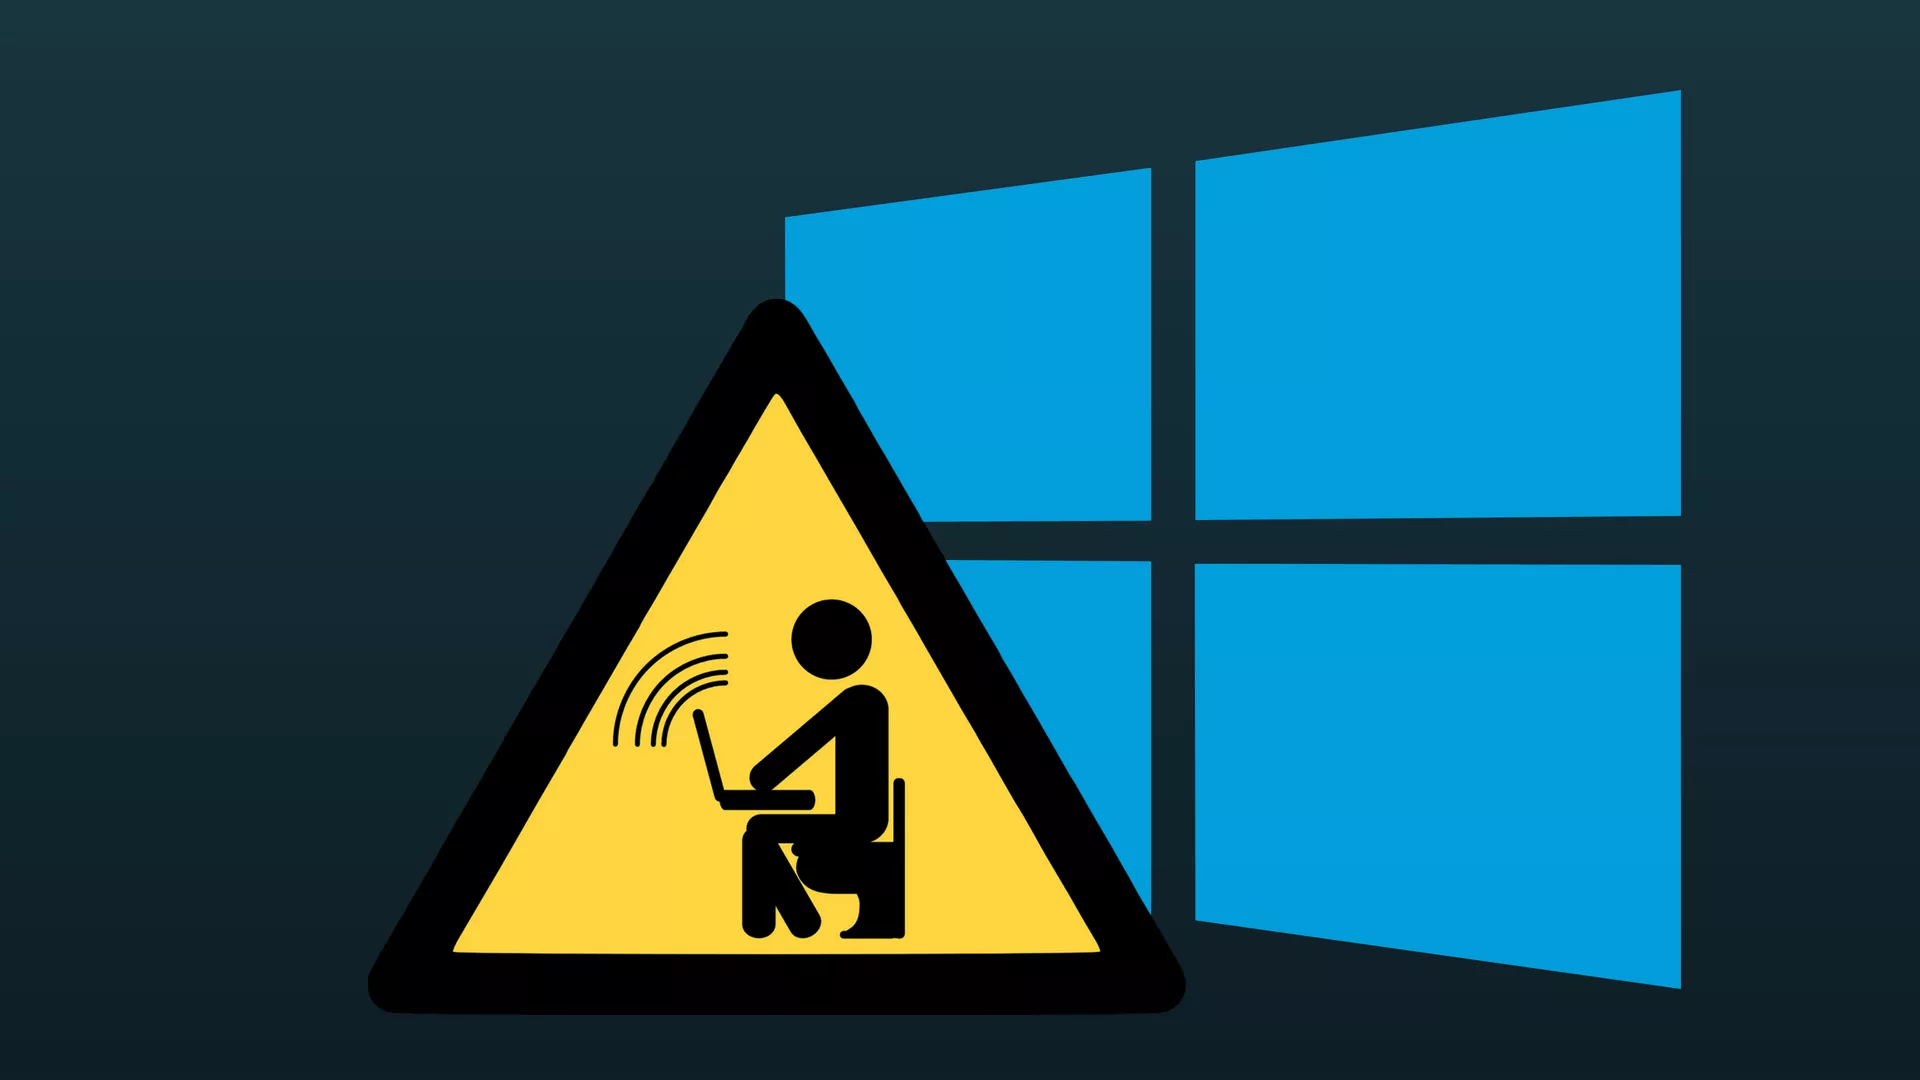 Windows 10 Data Usage Tips and Tricks